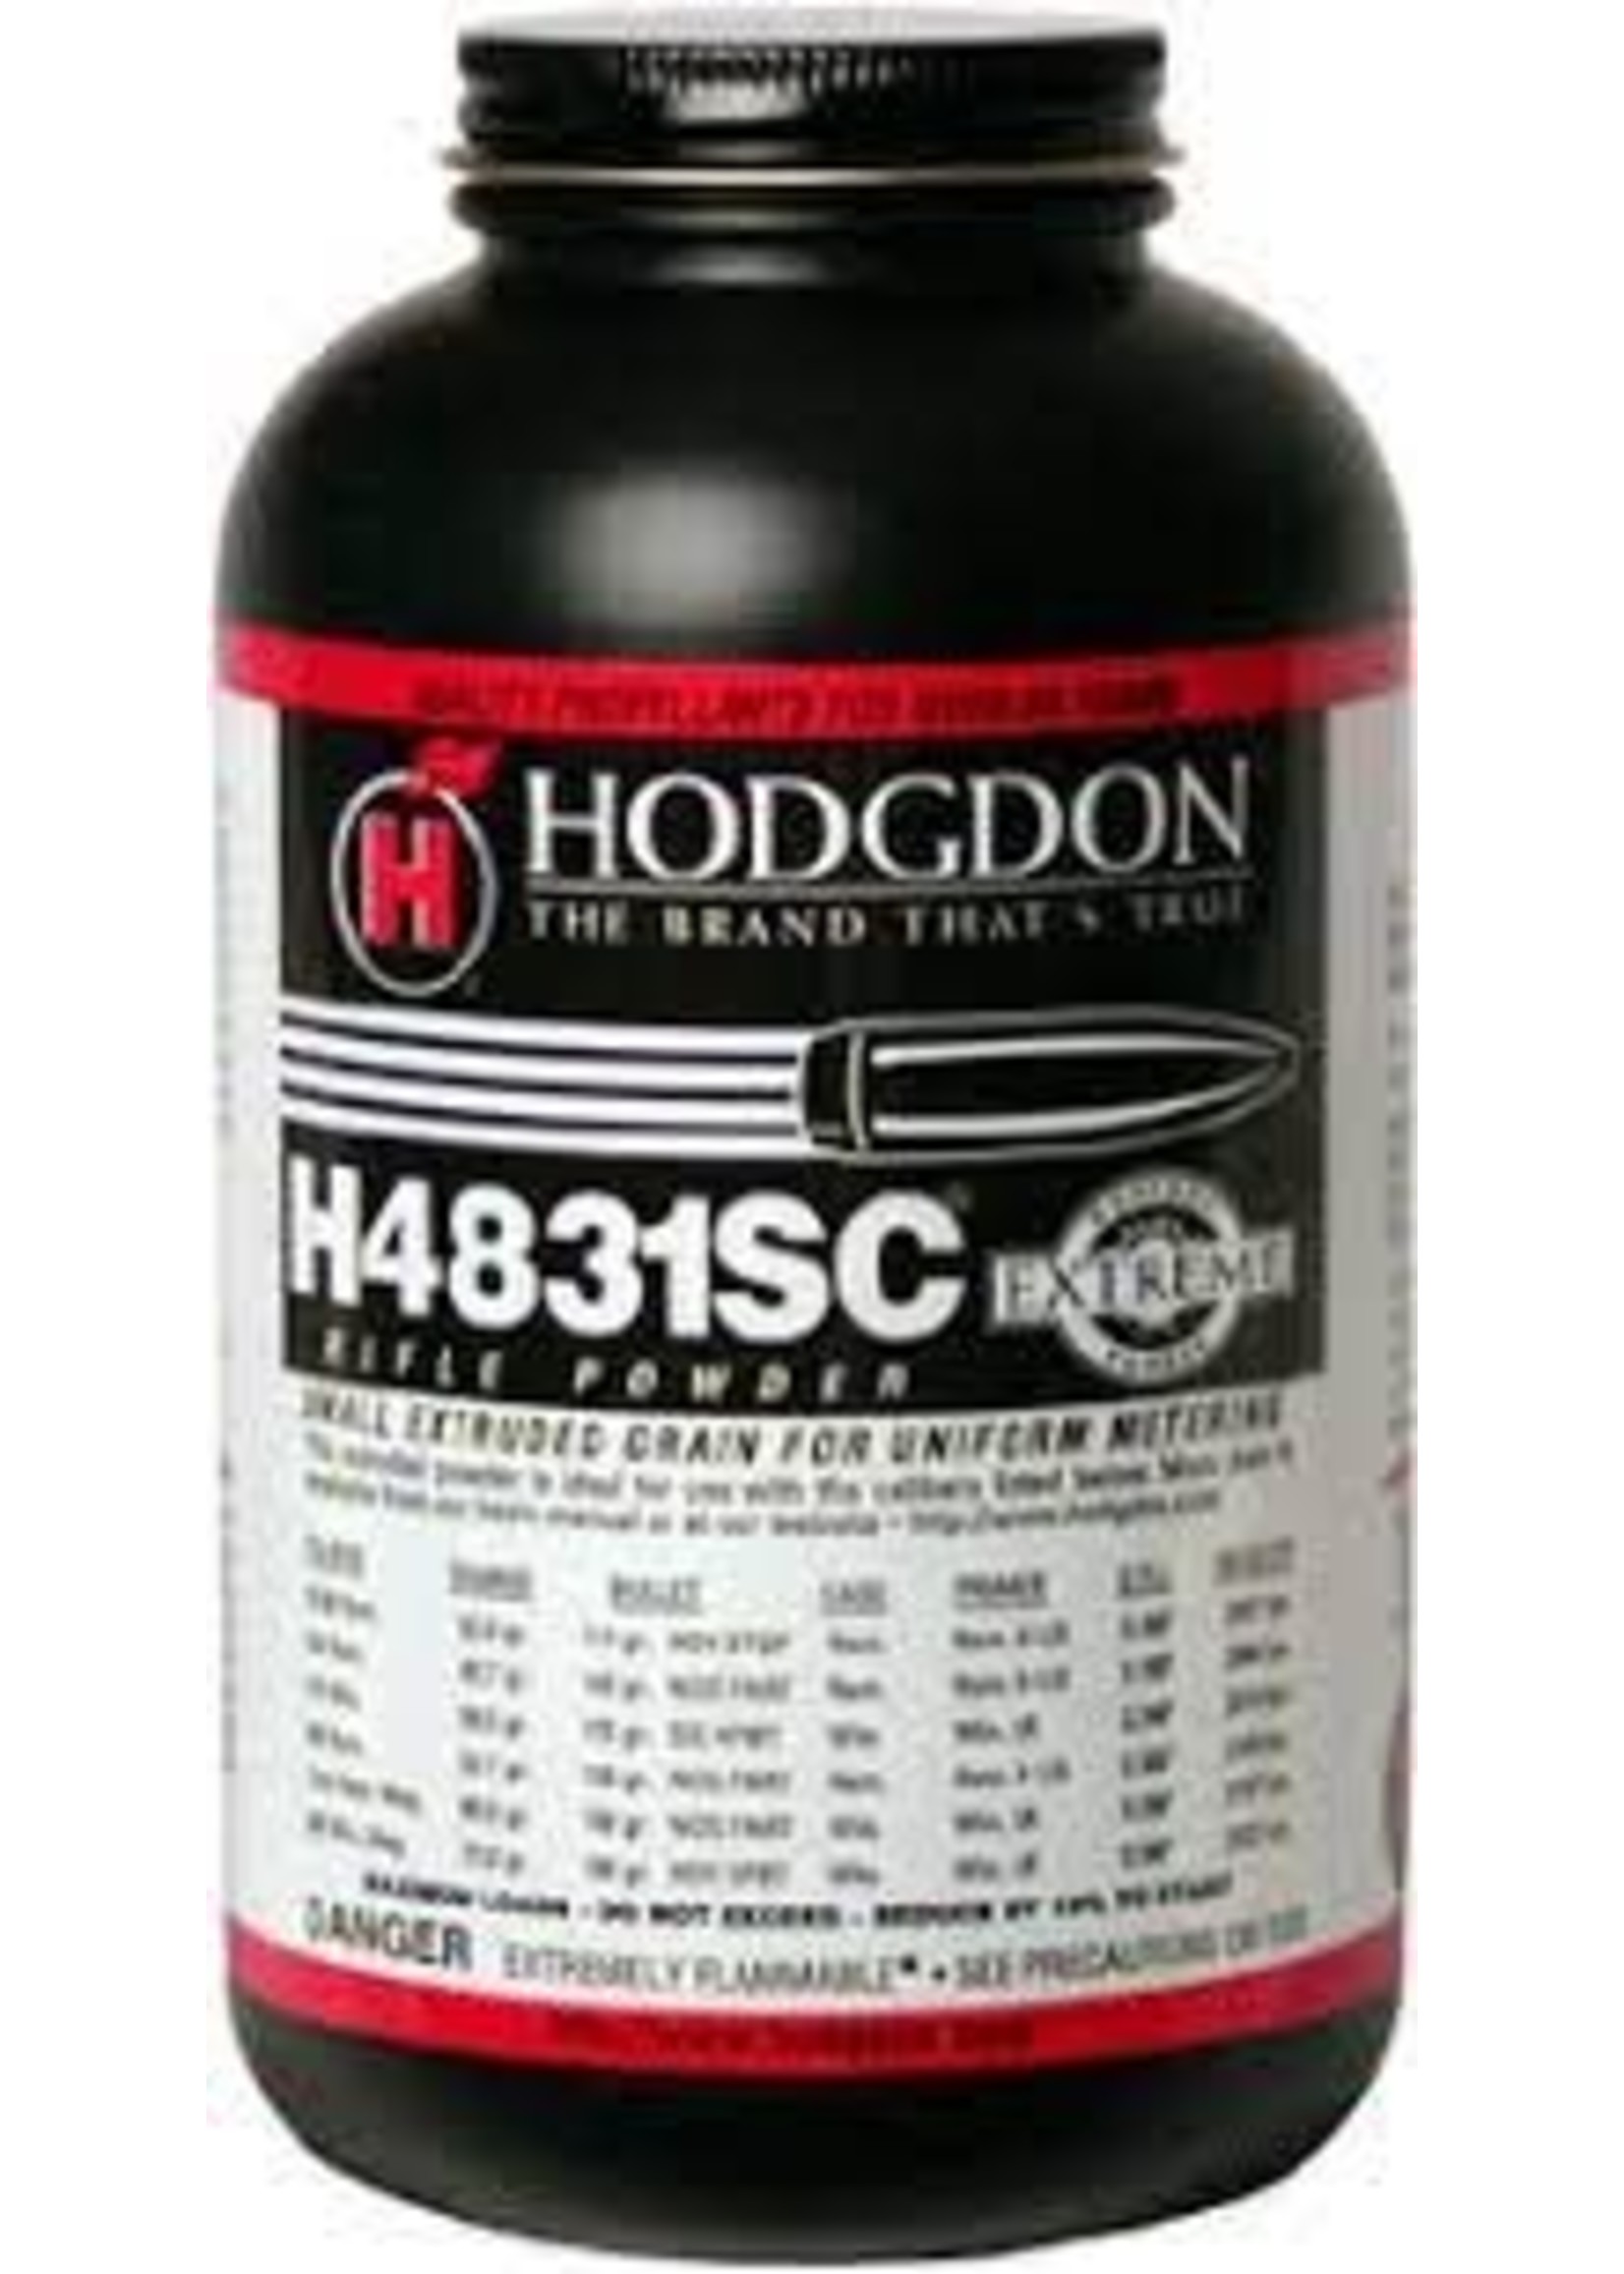 HODGDON HODGDON H4831SC RELOADING POWDER 1LB